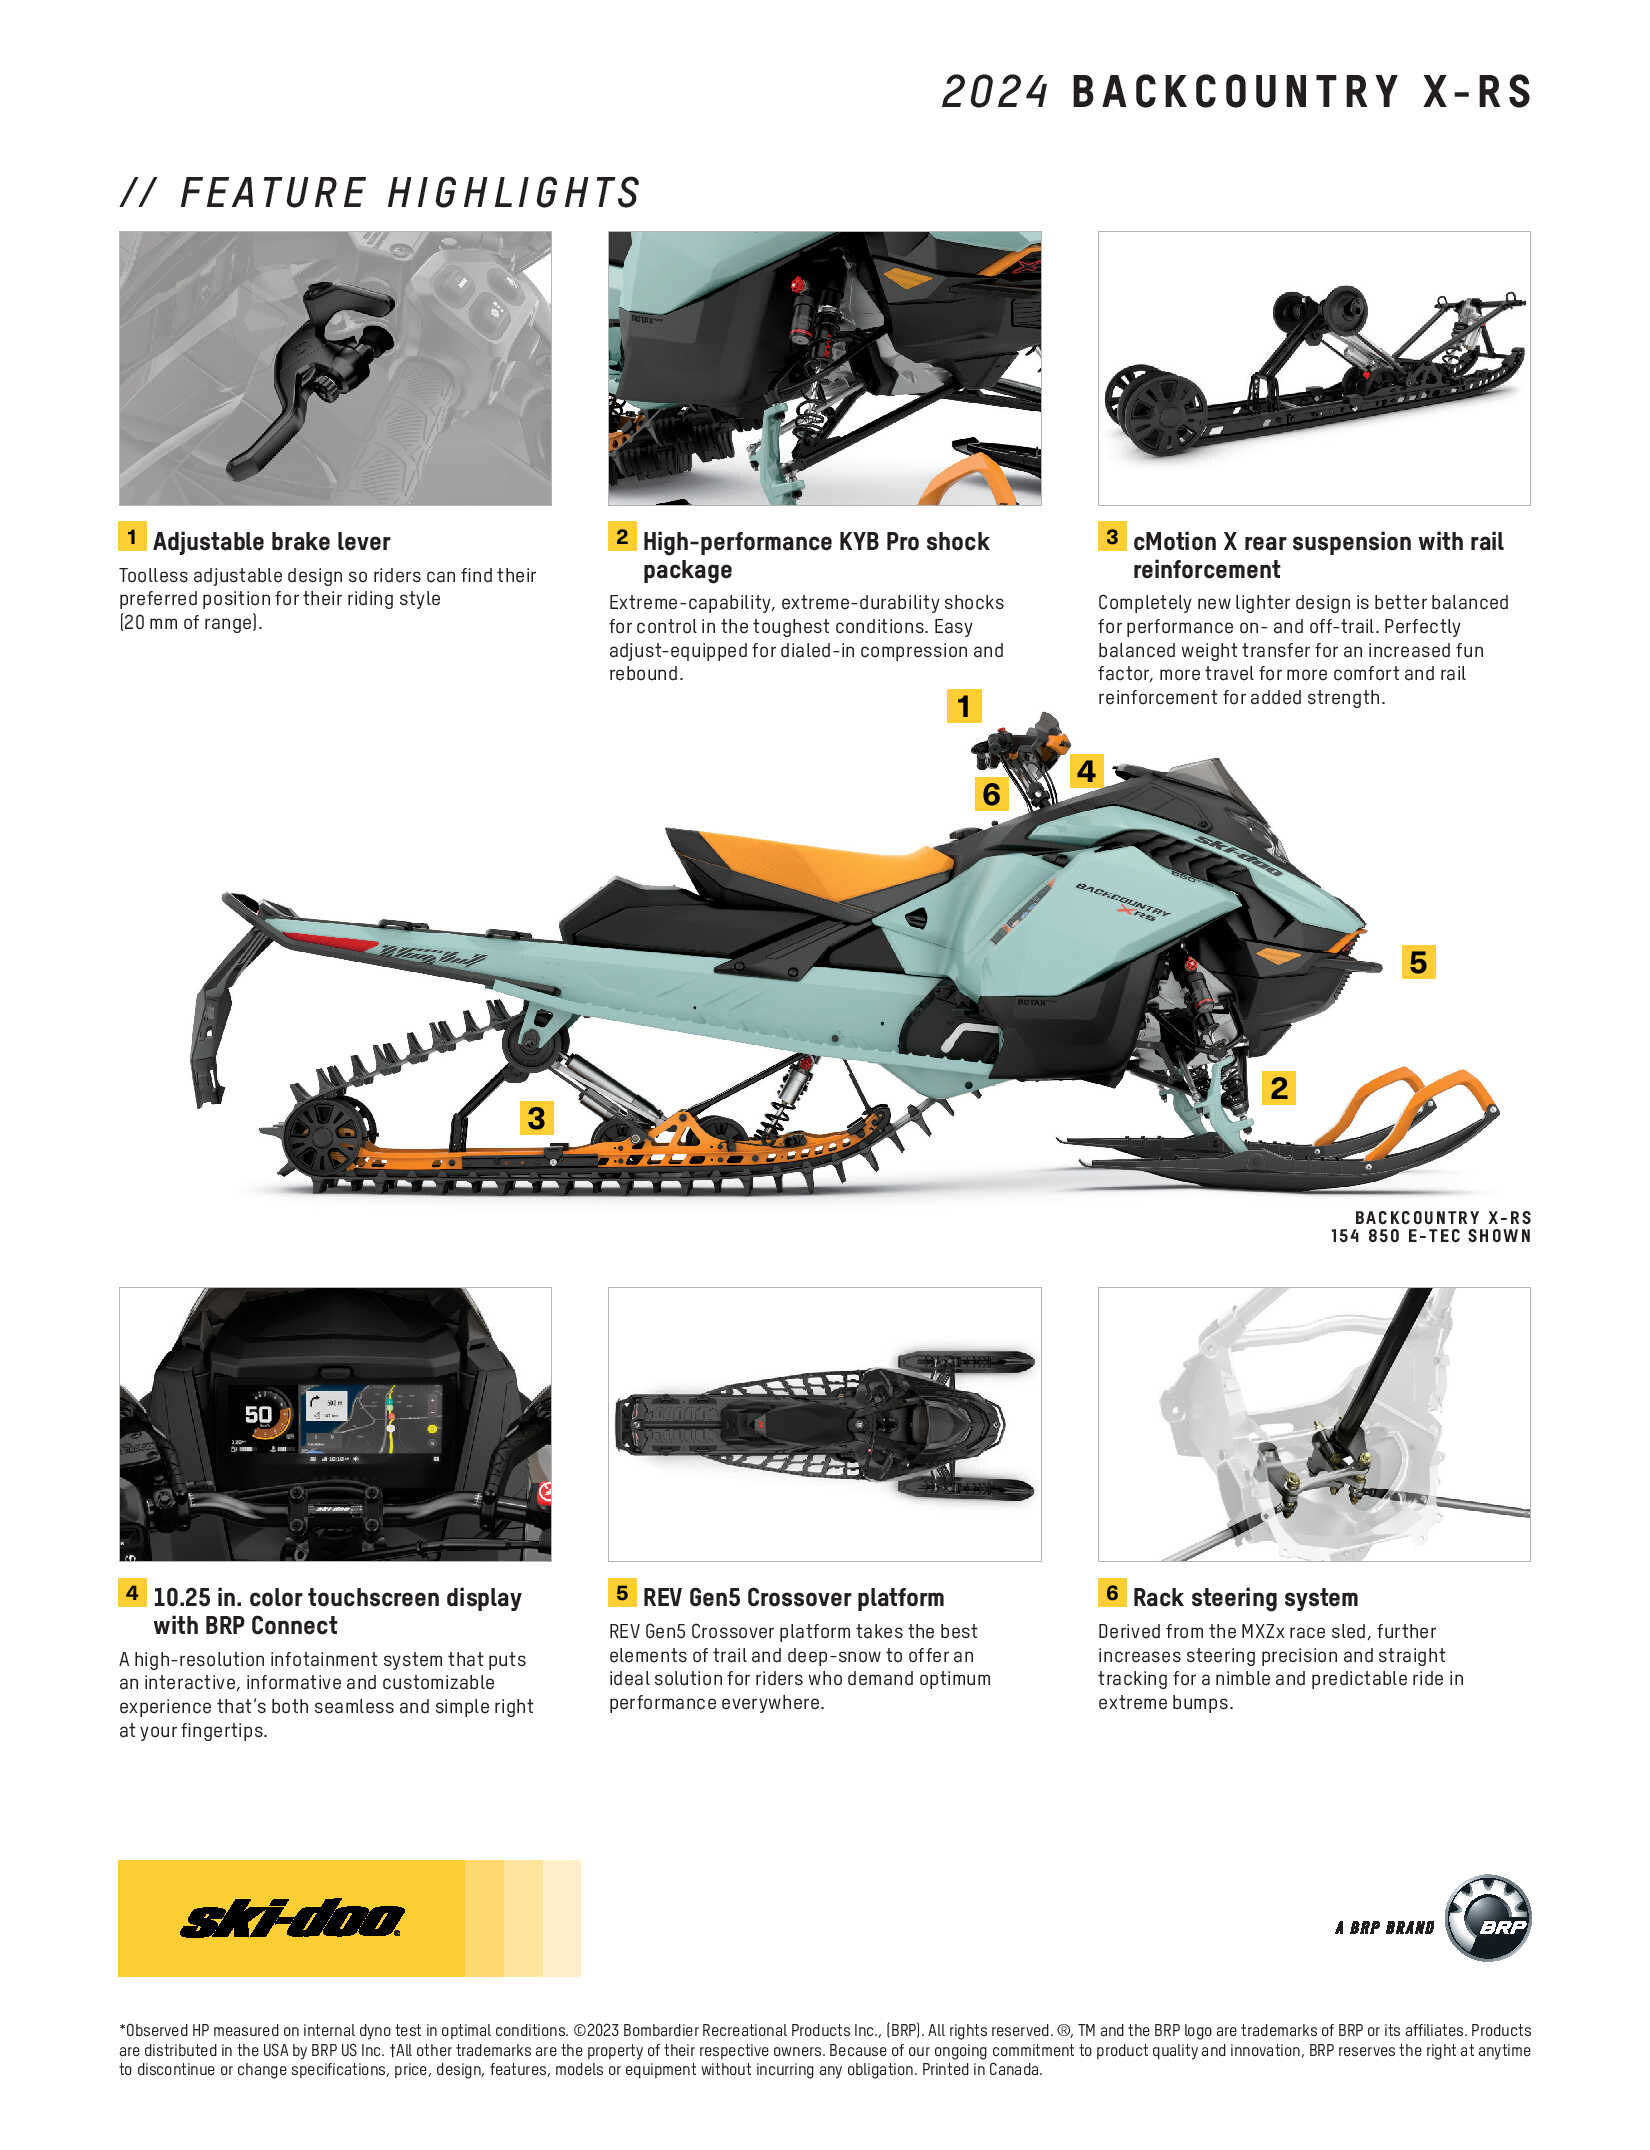 2024 Ski-Doo Backcountry X-RS Specs